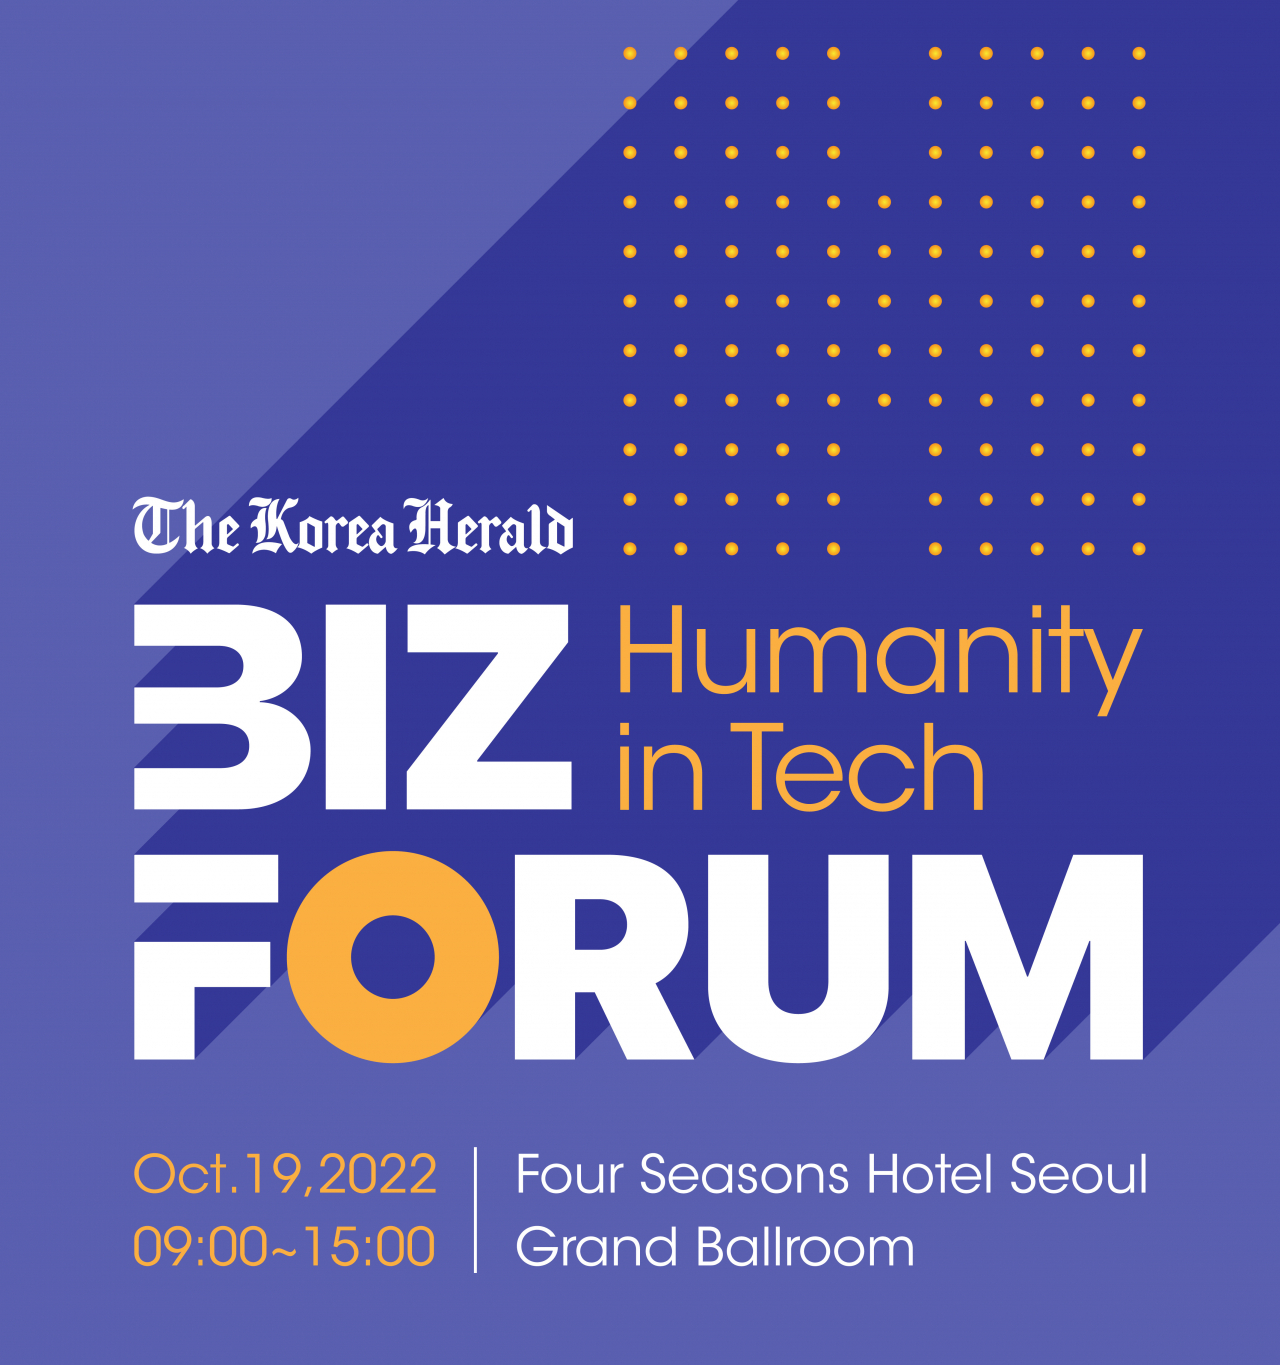 The poster for The Korea Herald Biz Forum.